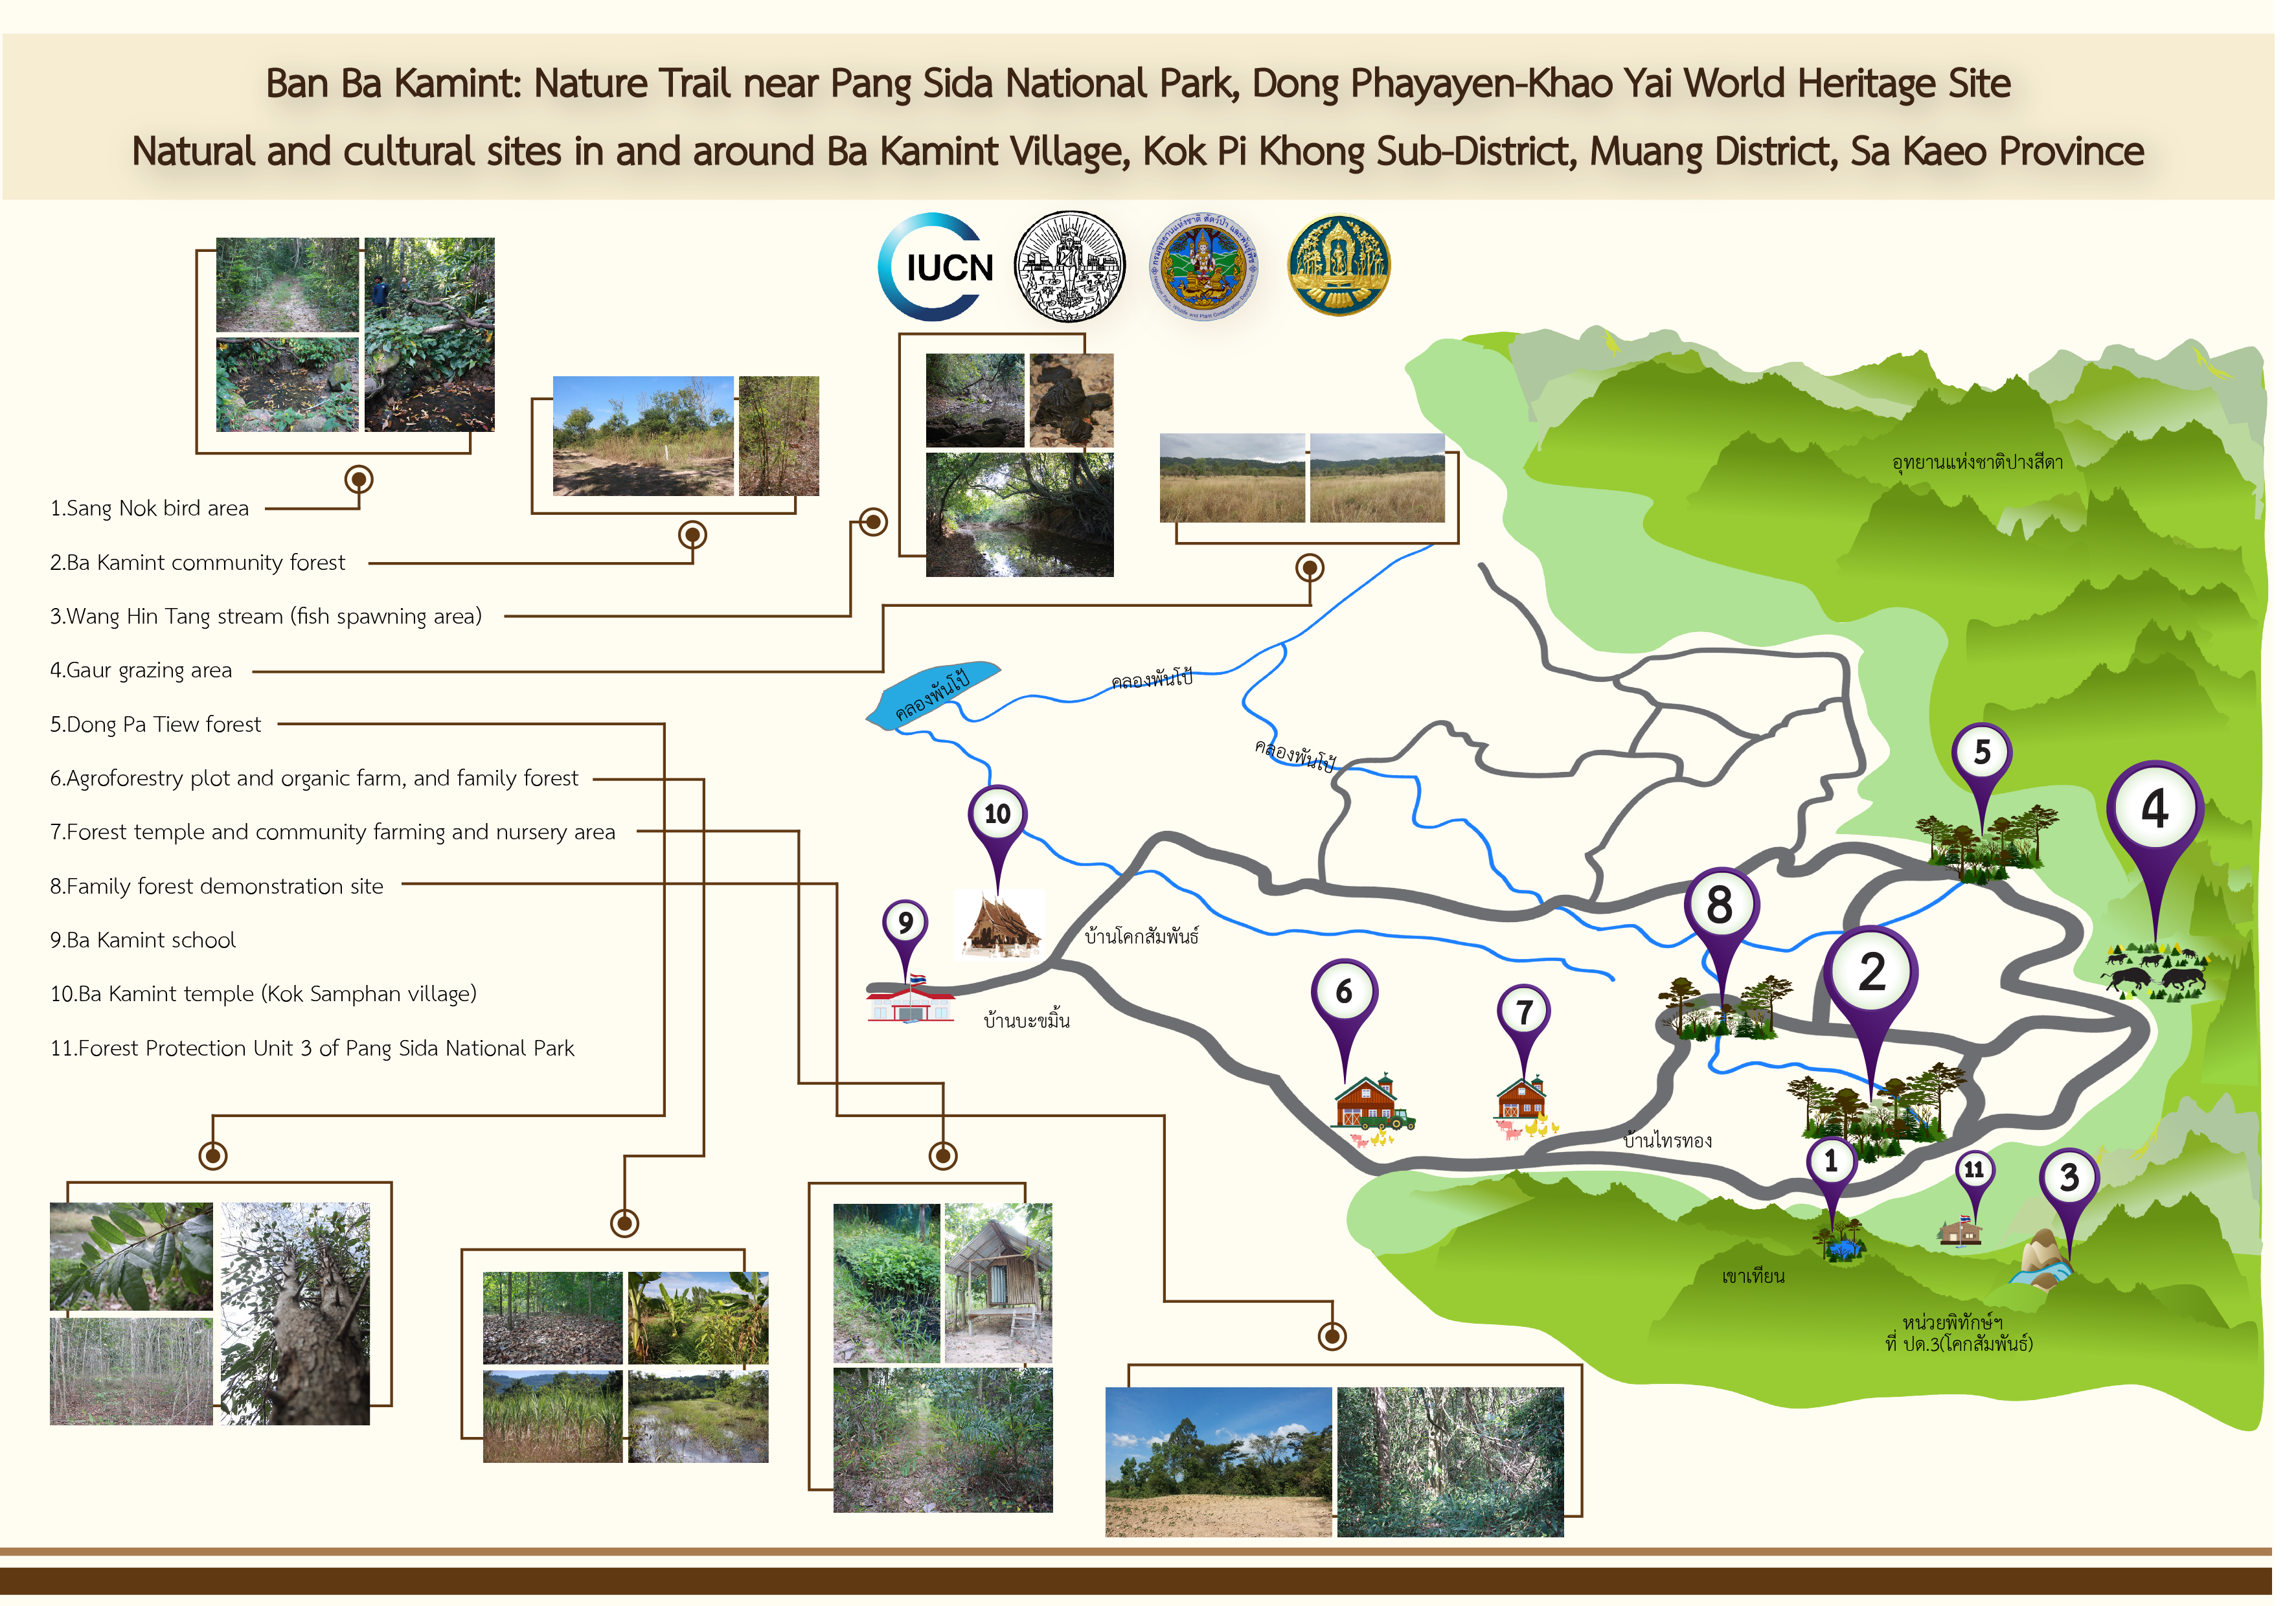 Map of natural sites around Ba Kamint community, adjacent to Pang Sida National Park